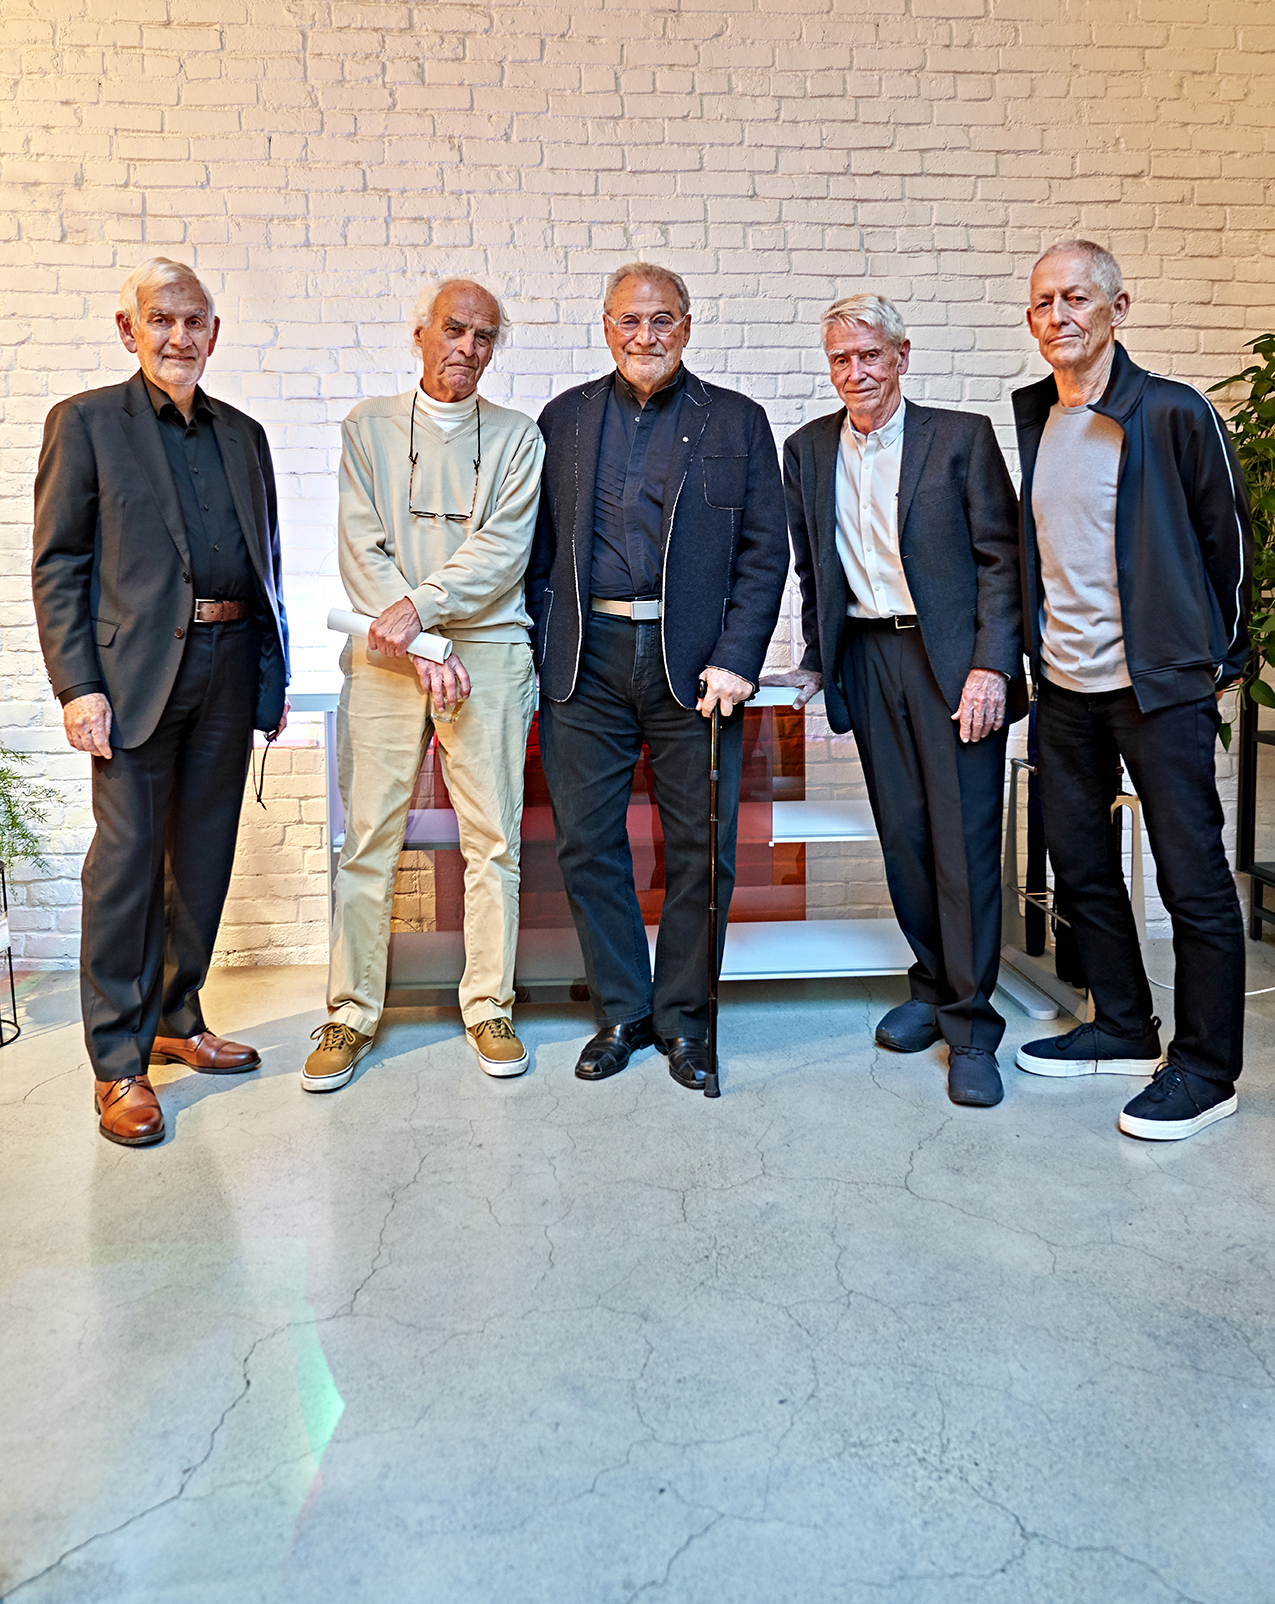 Richard Henriquez, Paul Merrick, Bruno Freschi, Don Vaughan, Peter Cardew. Photograph by Ilijc Albanese.